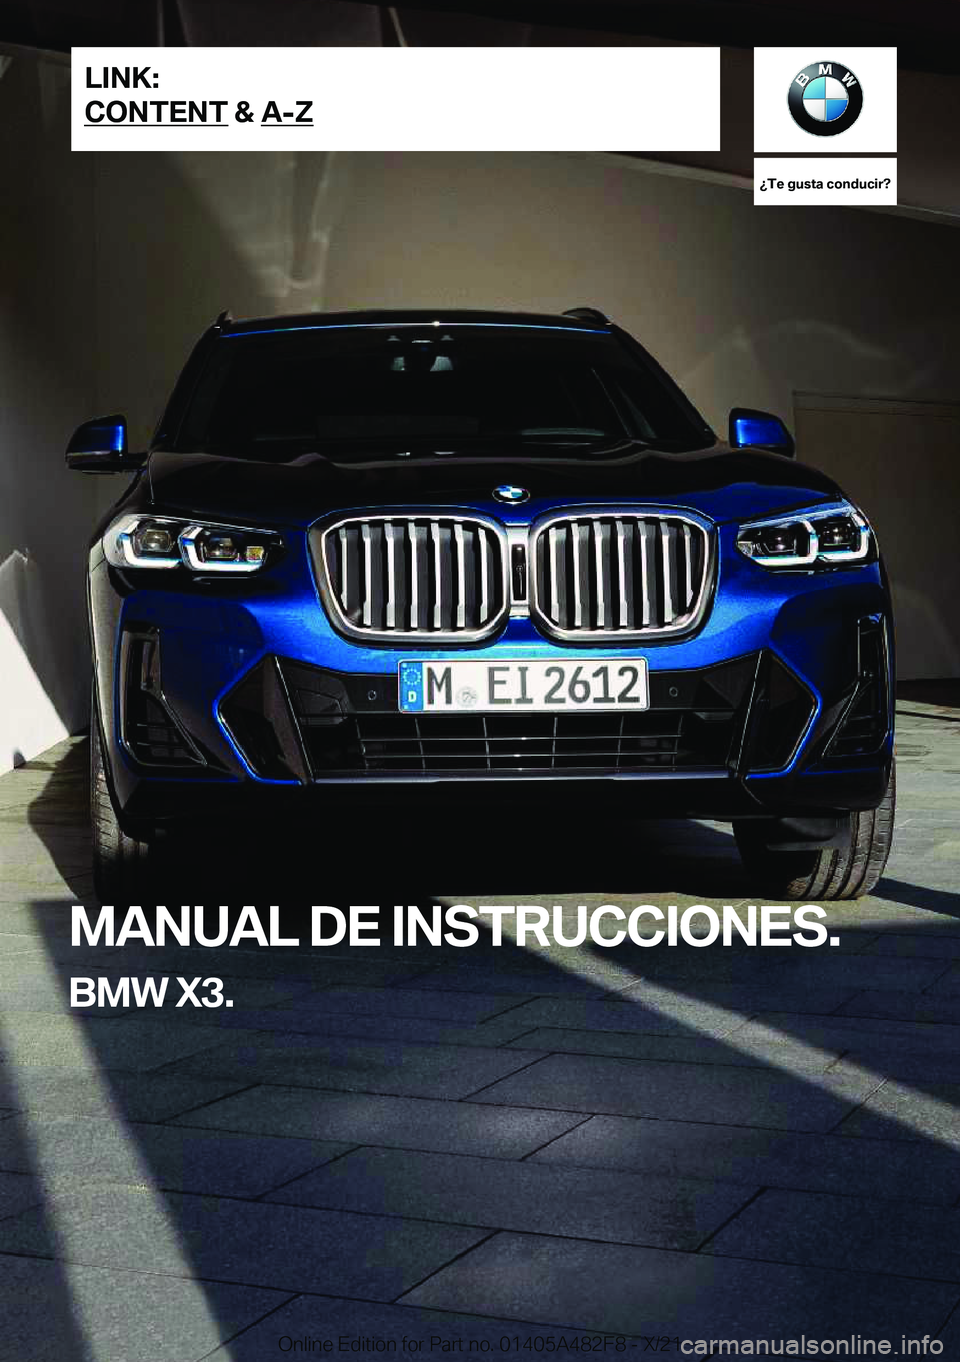 BMW X3 2022  Manuales de Empleo (in Spanish) ��T�e��g�u�s�t�a��c�o�n�d�u�c�i�r� 
�M�A�N�U�A�L��D�E��I�N�S�T�R�U�C�C�I�O�N�E�S�.
�B�M�W��X�3�.�L�I�N�K�:
�C�O�N�T�E�N�T��&��A�-�Z�O�n�l�i�n�e��E�d�i�t�i�o�n��f�o�r��P�a�r�t��n�o�.��0�1�